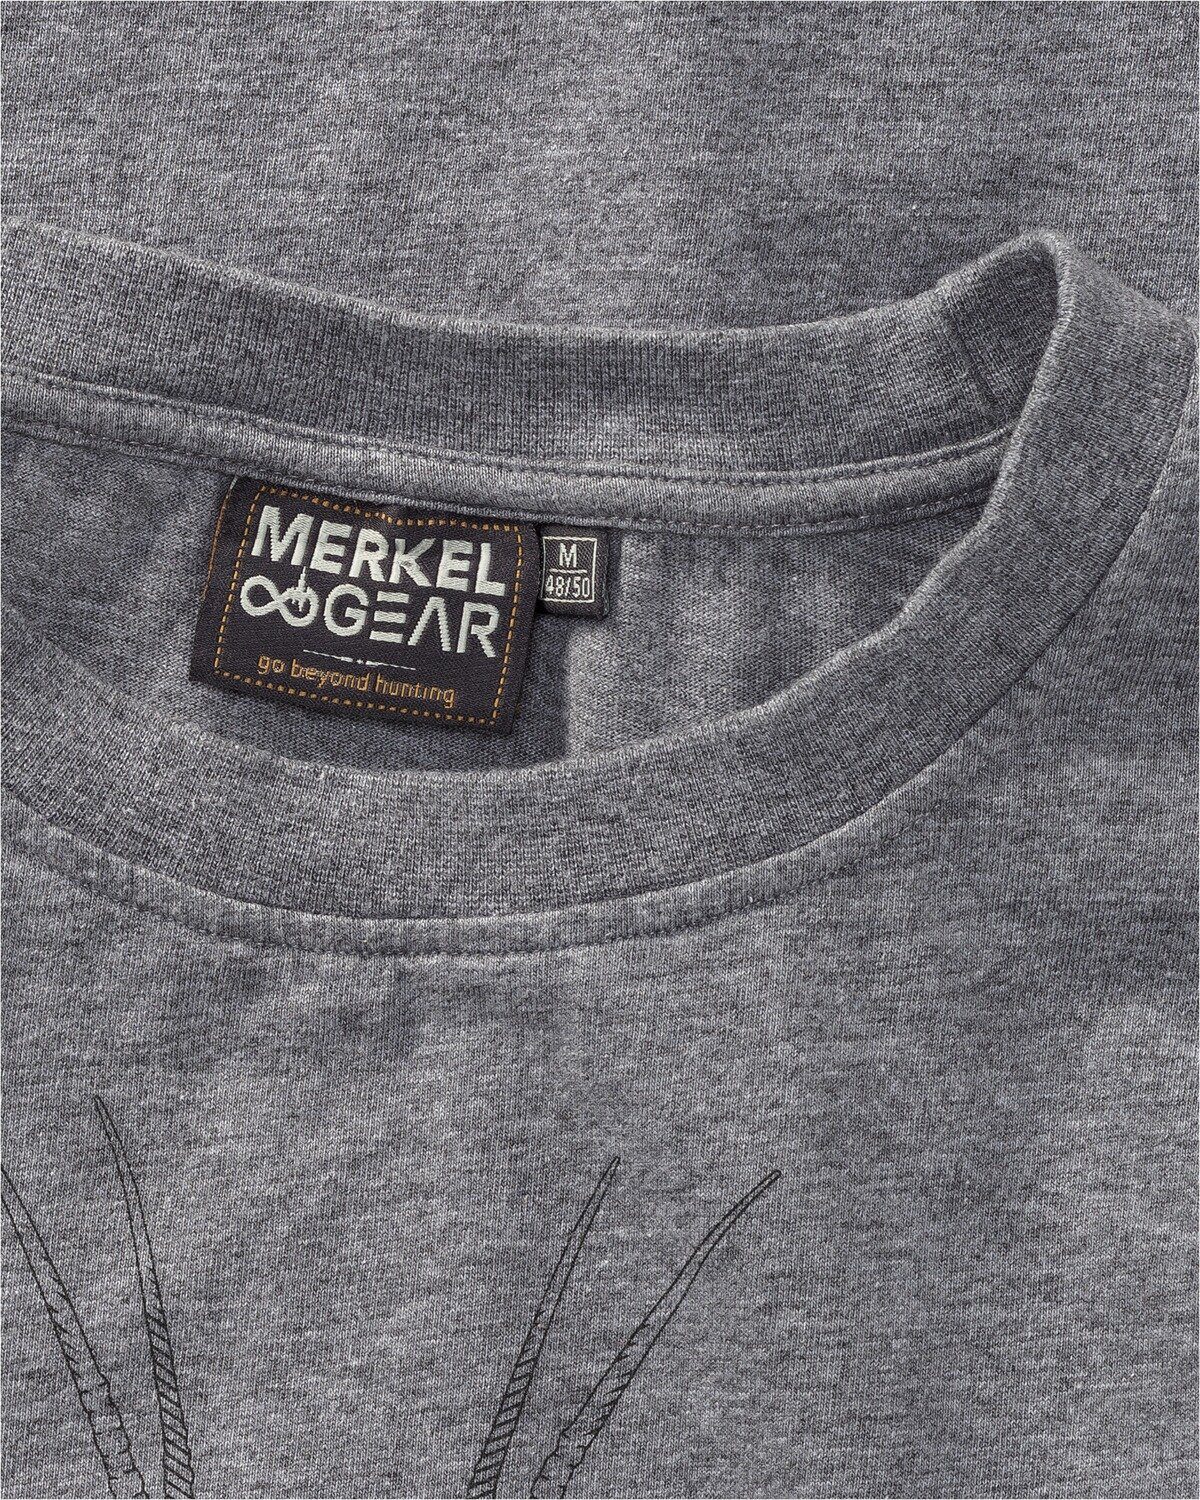 WorldWideHunting T-Shirt T-Shirt Merkel Gear